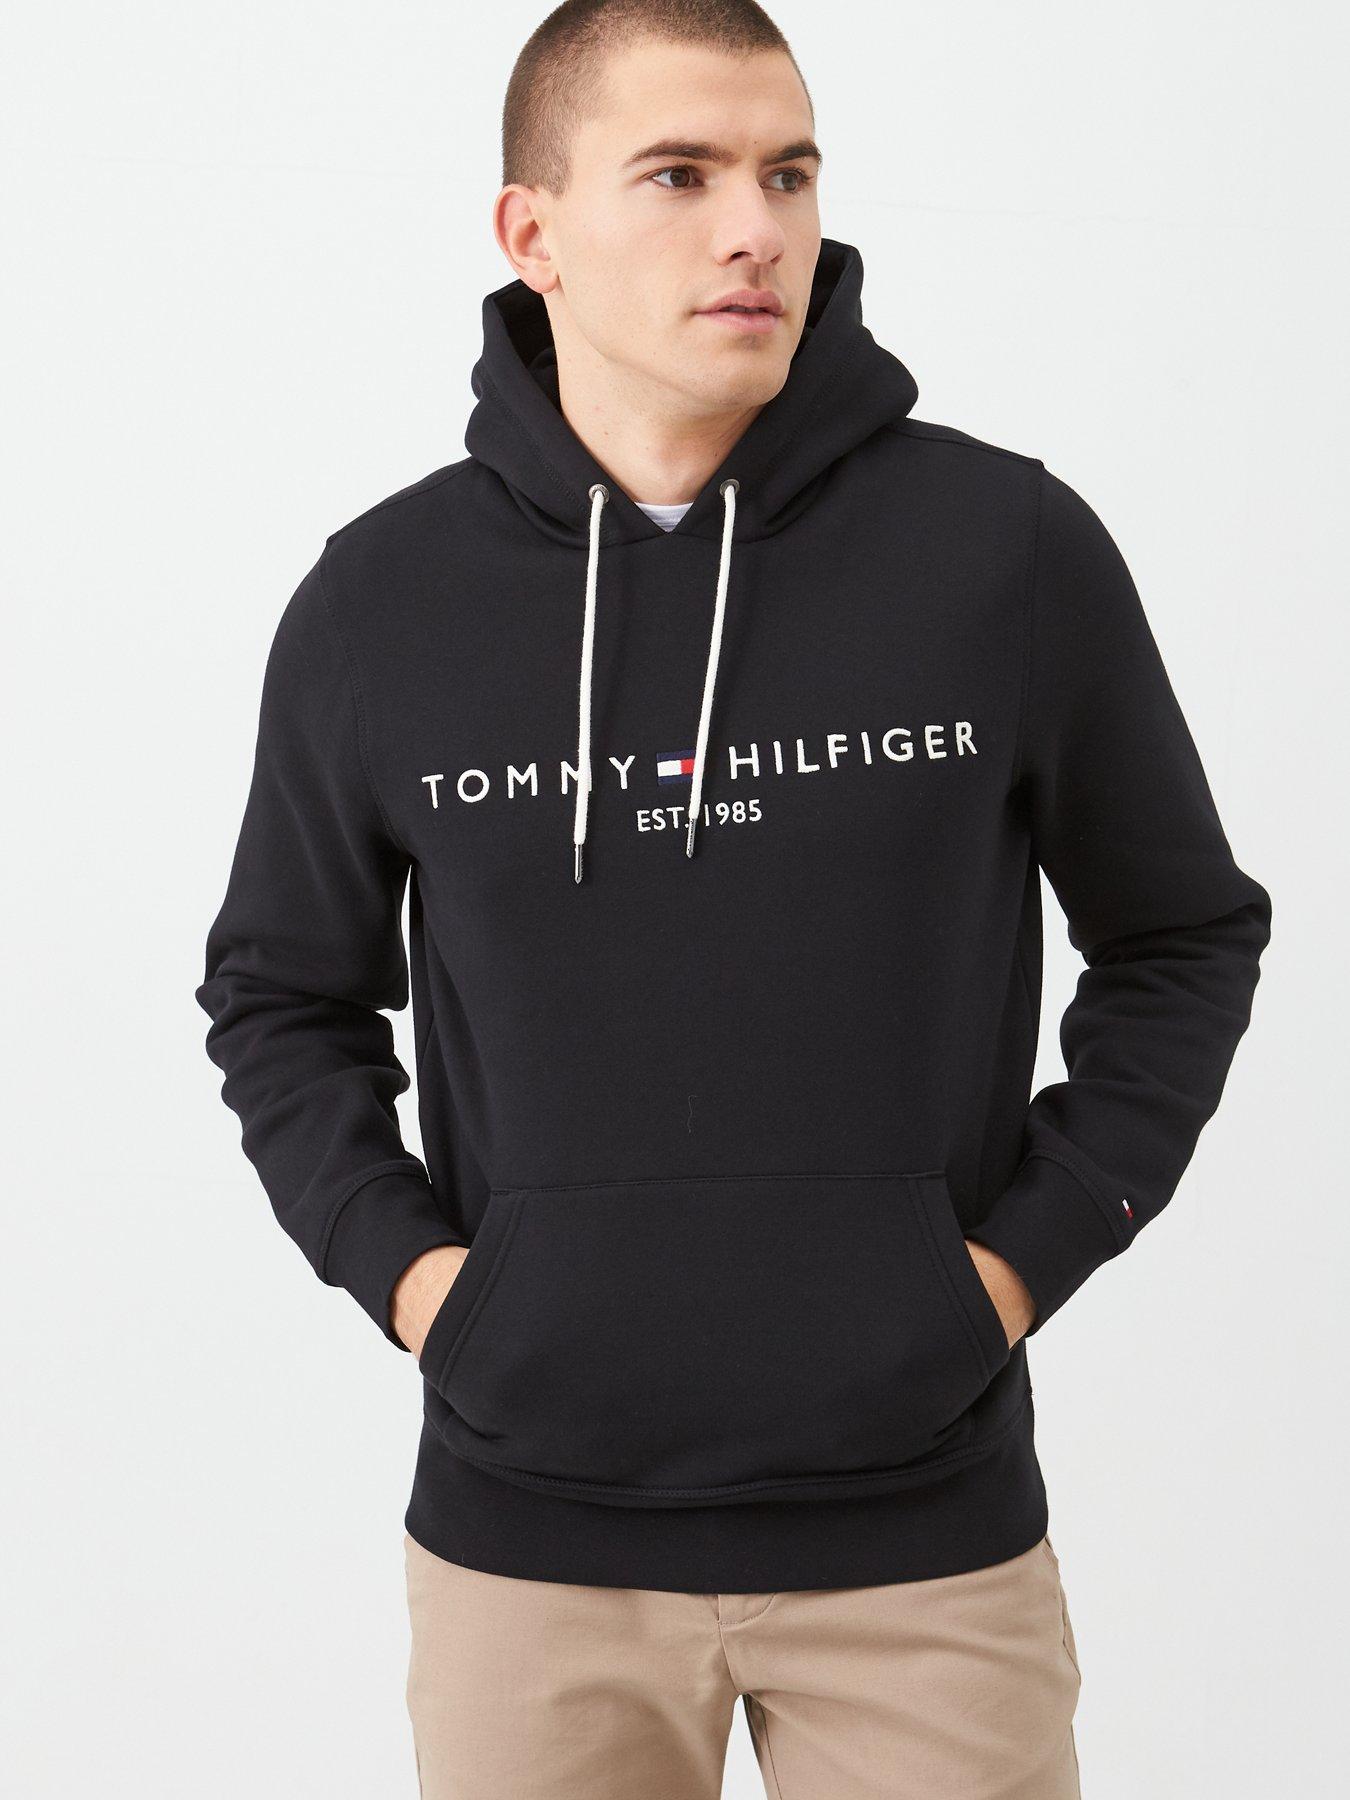 Tommy hilfiger | Hoodies & Men | sweatshirts